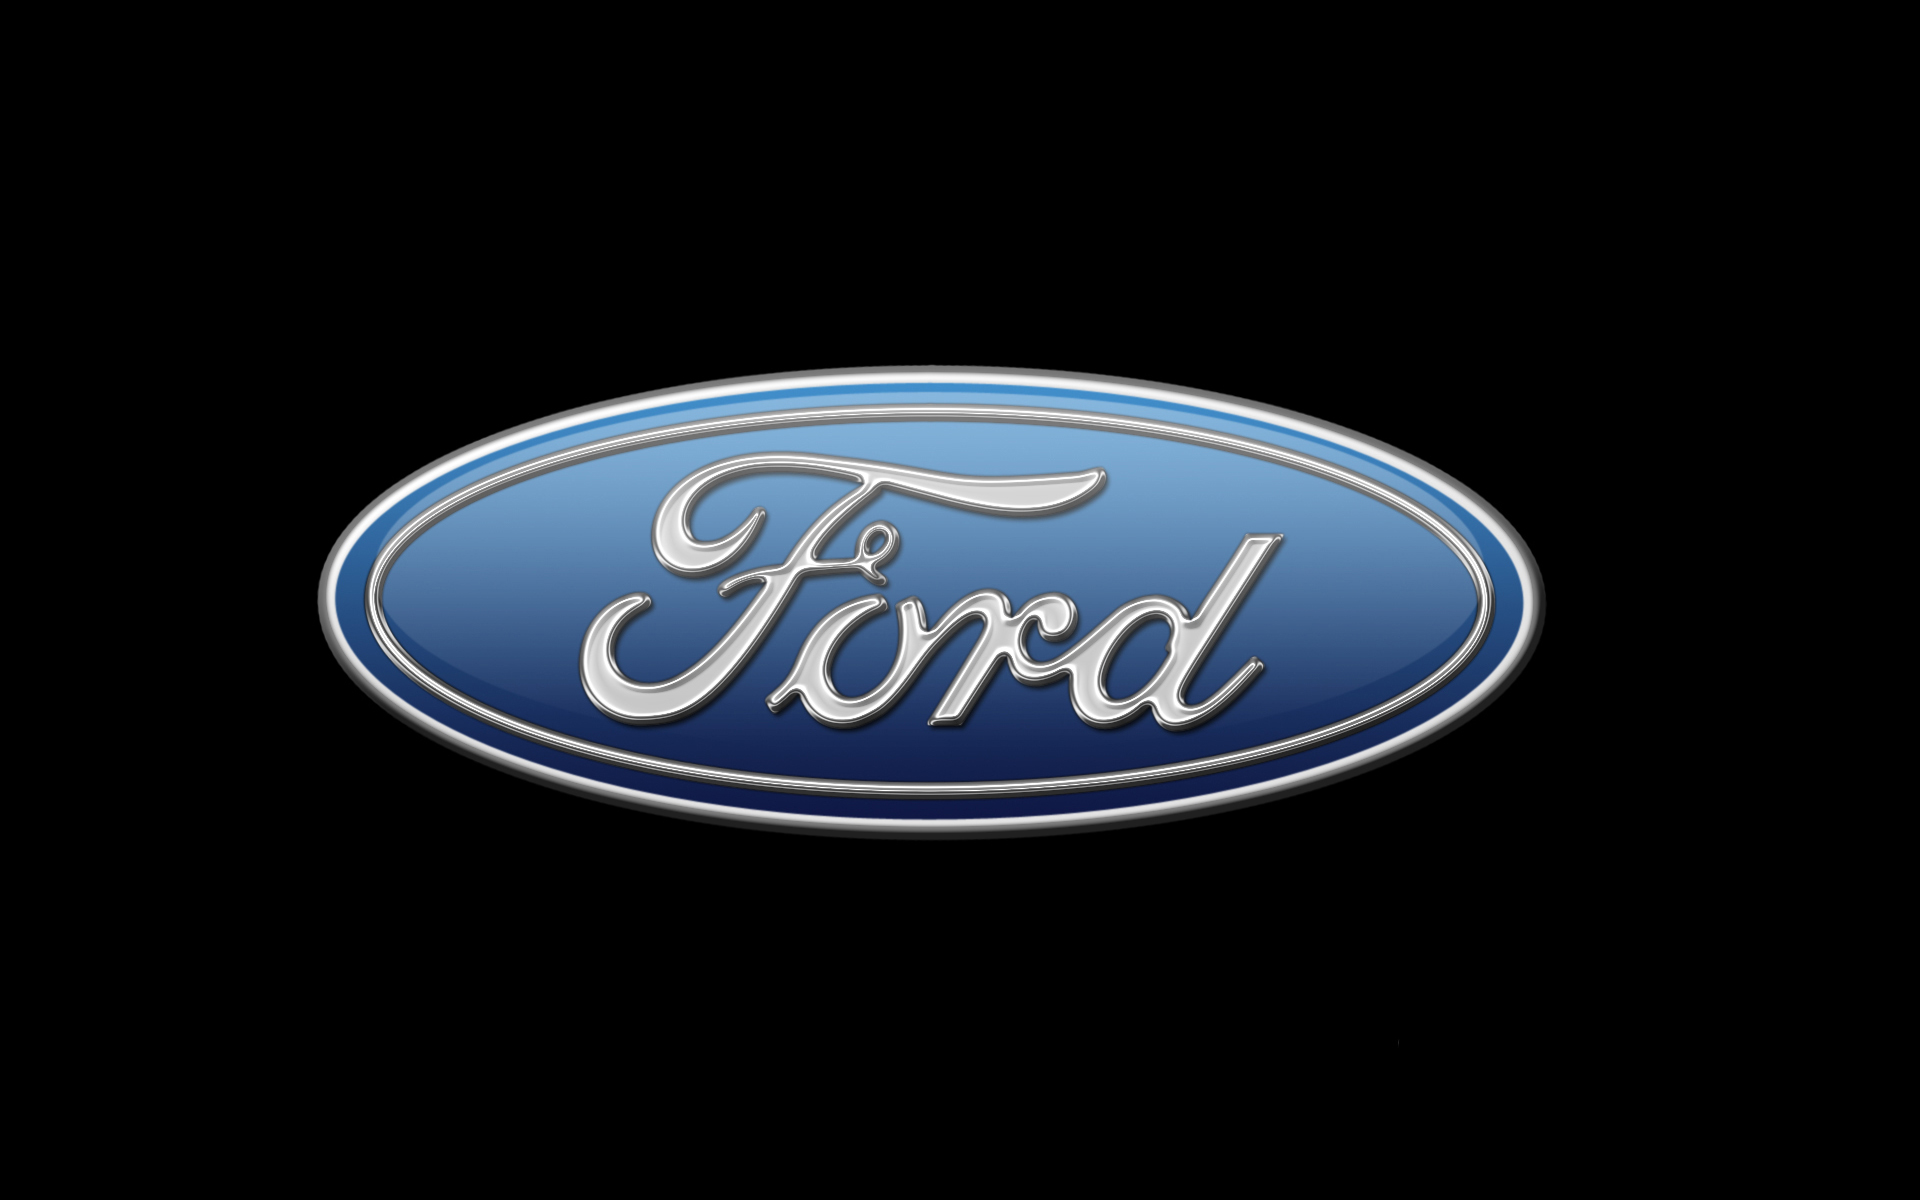 Ford customer service